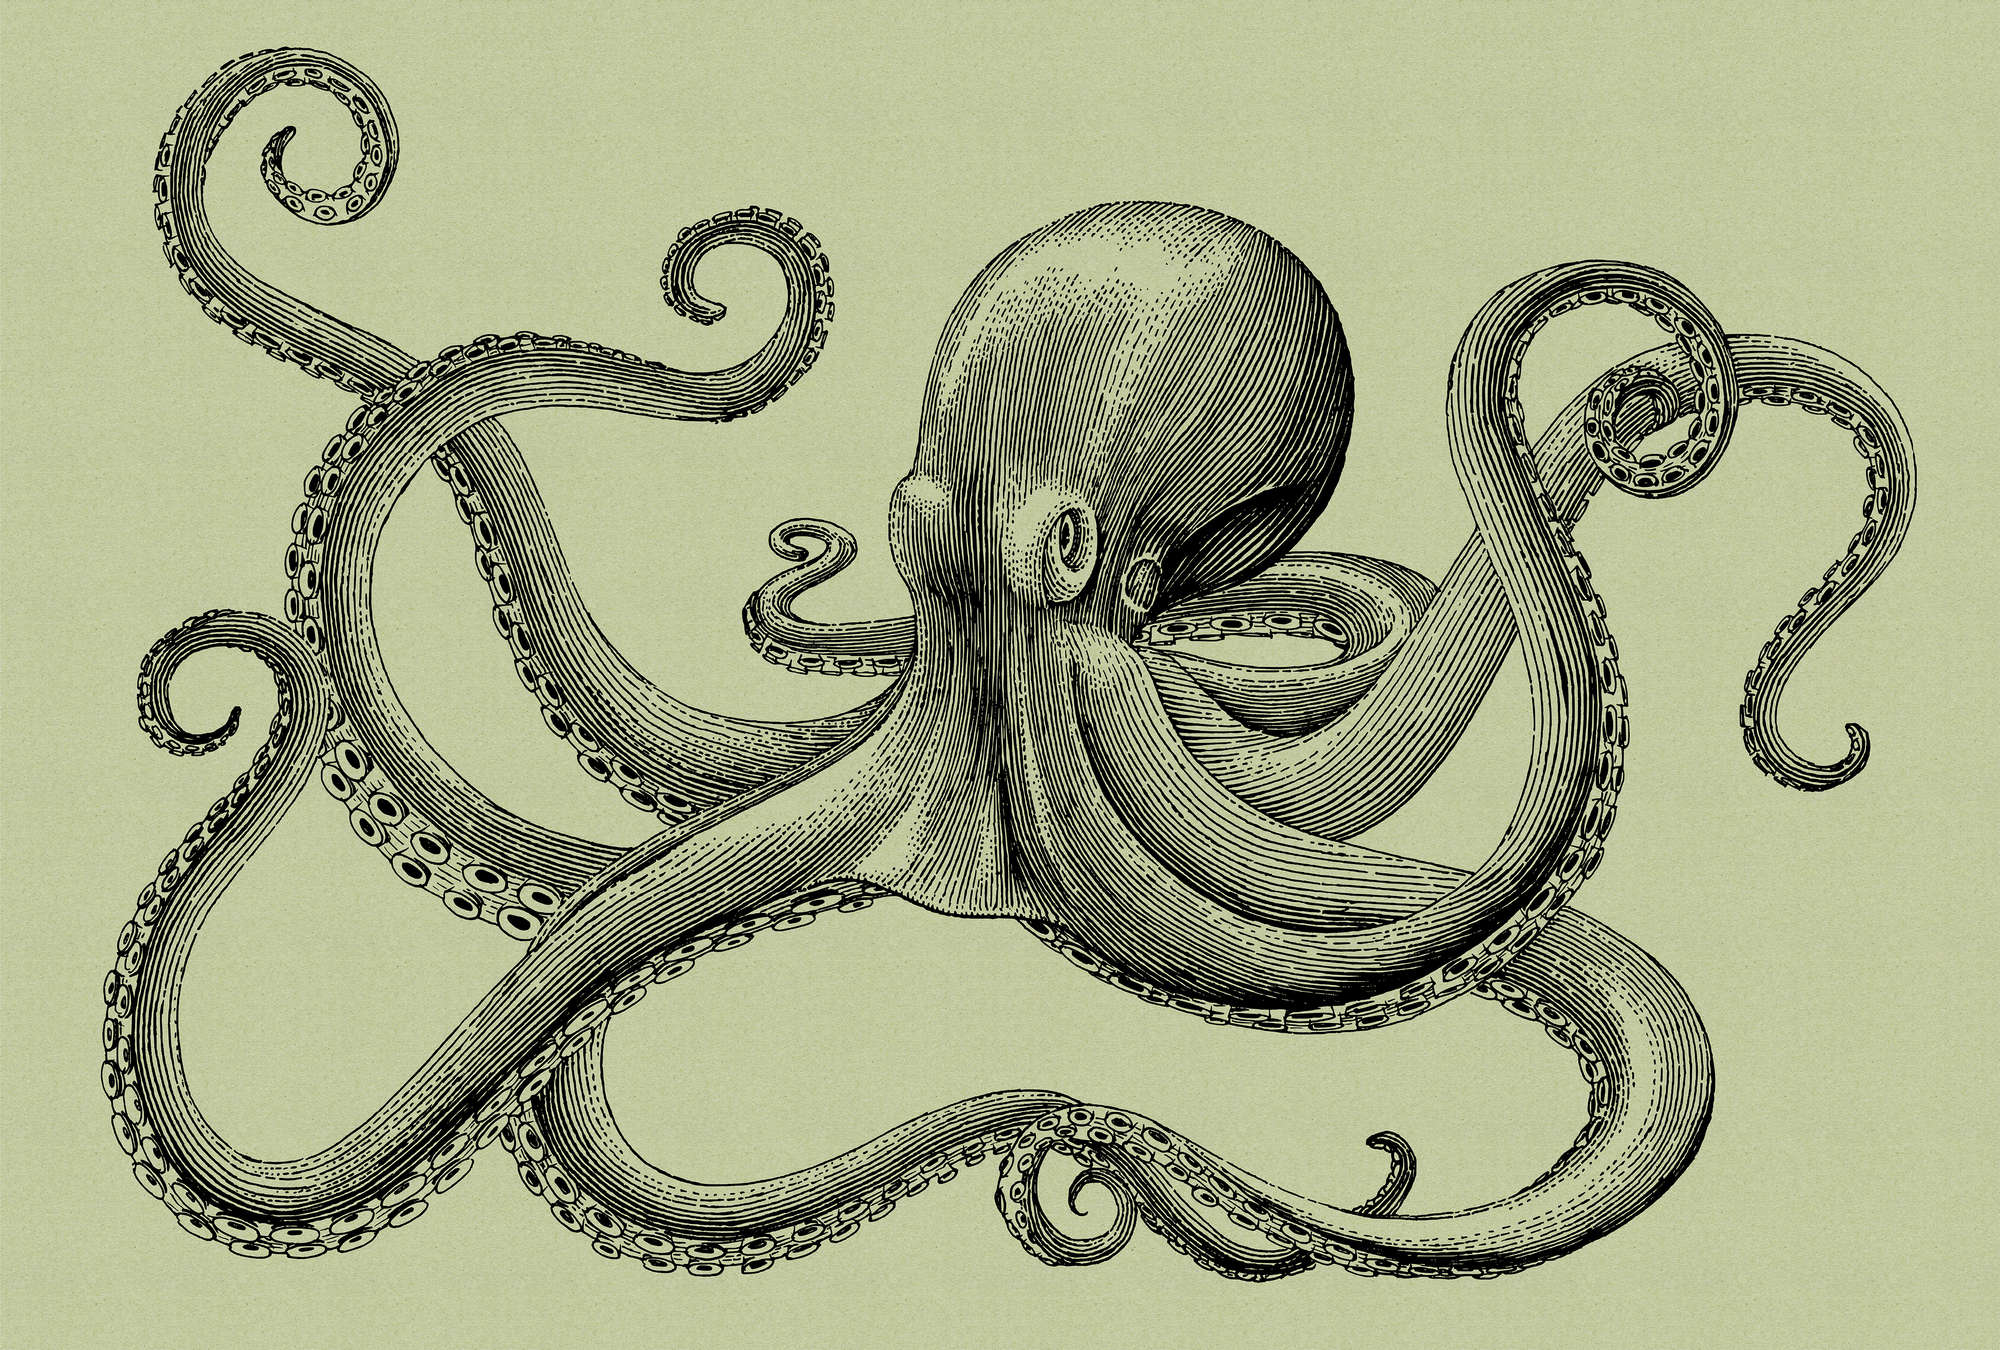             Jules 3 - Carta da parati Octopus - Stile schizzo e look vintage - Texture cartone - Verde, nero | Pile liscio opaco
        